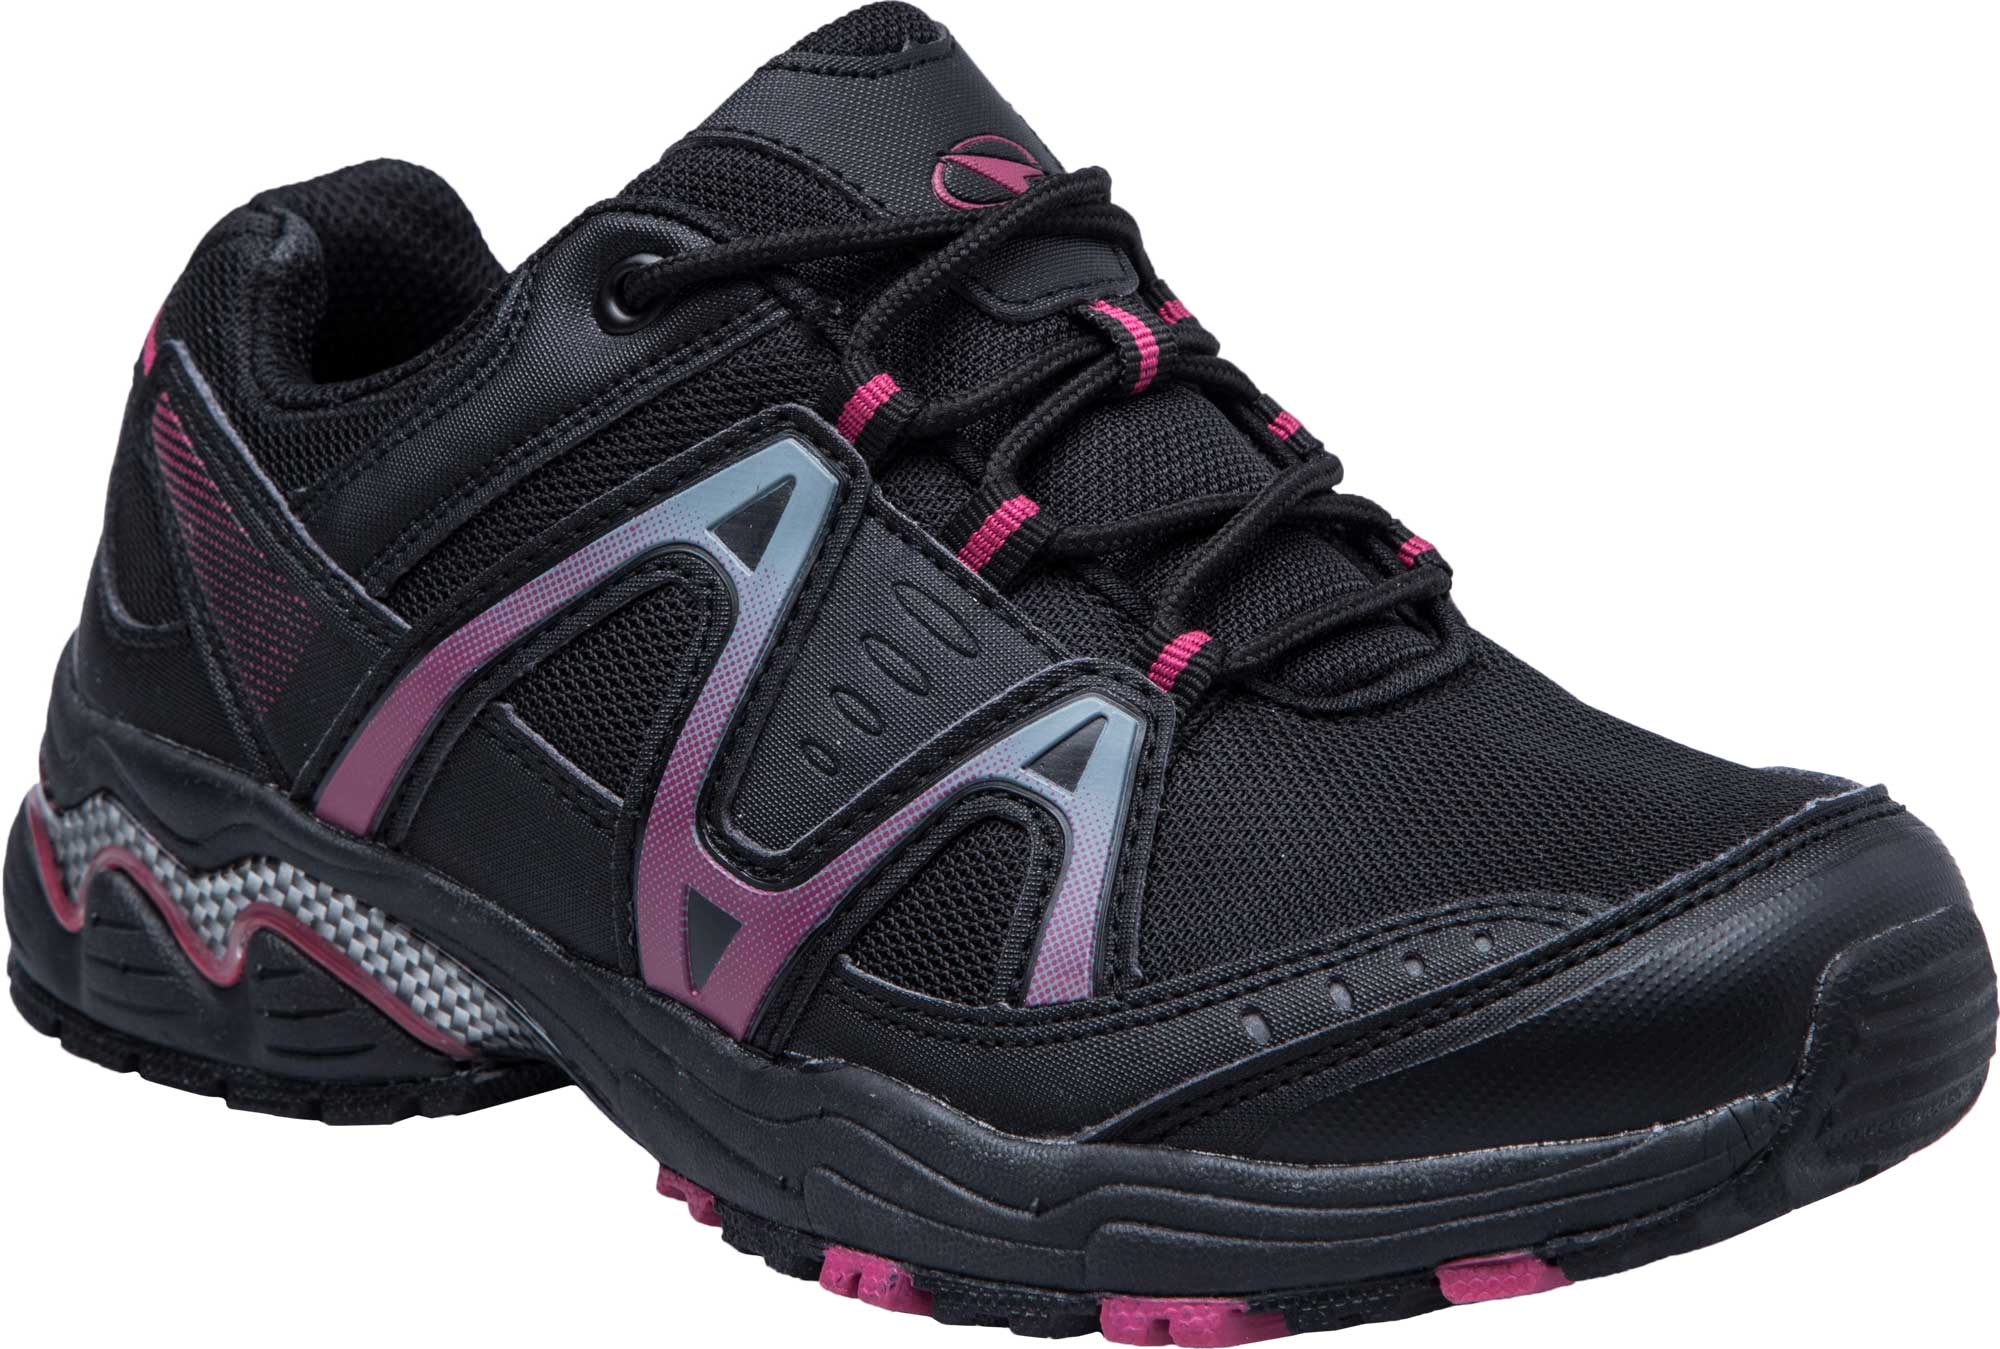 Trail shoes